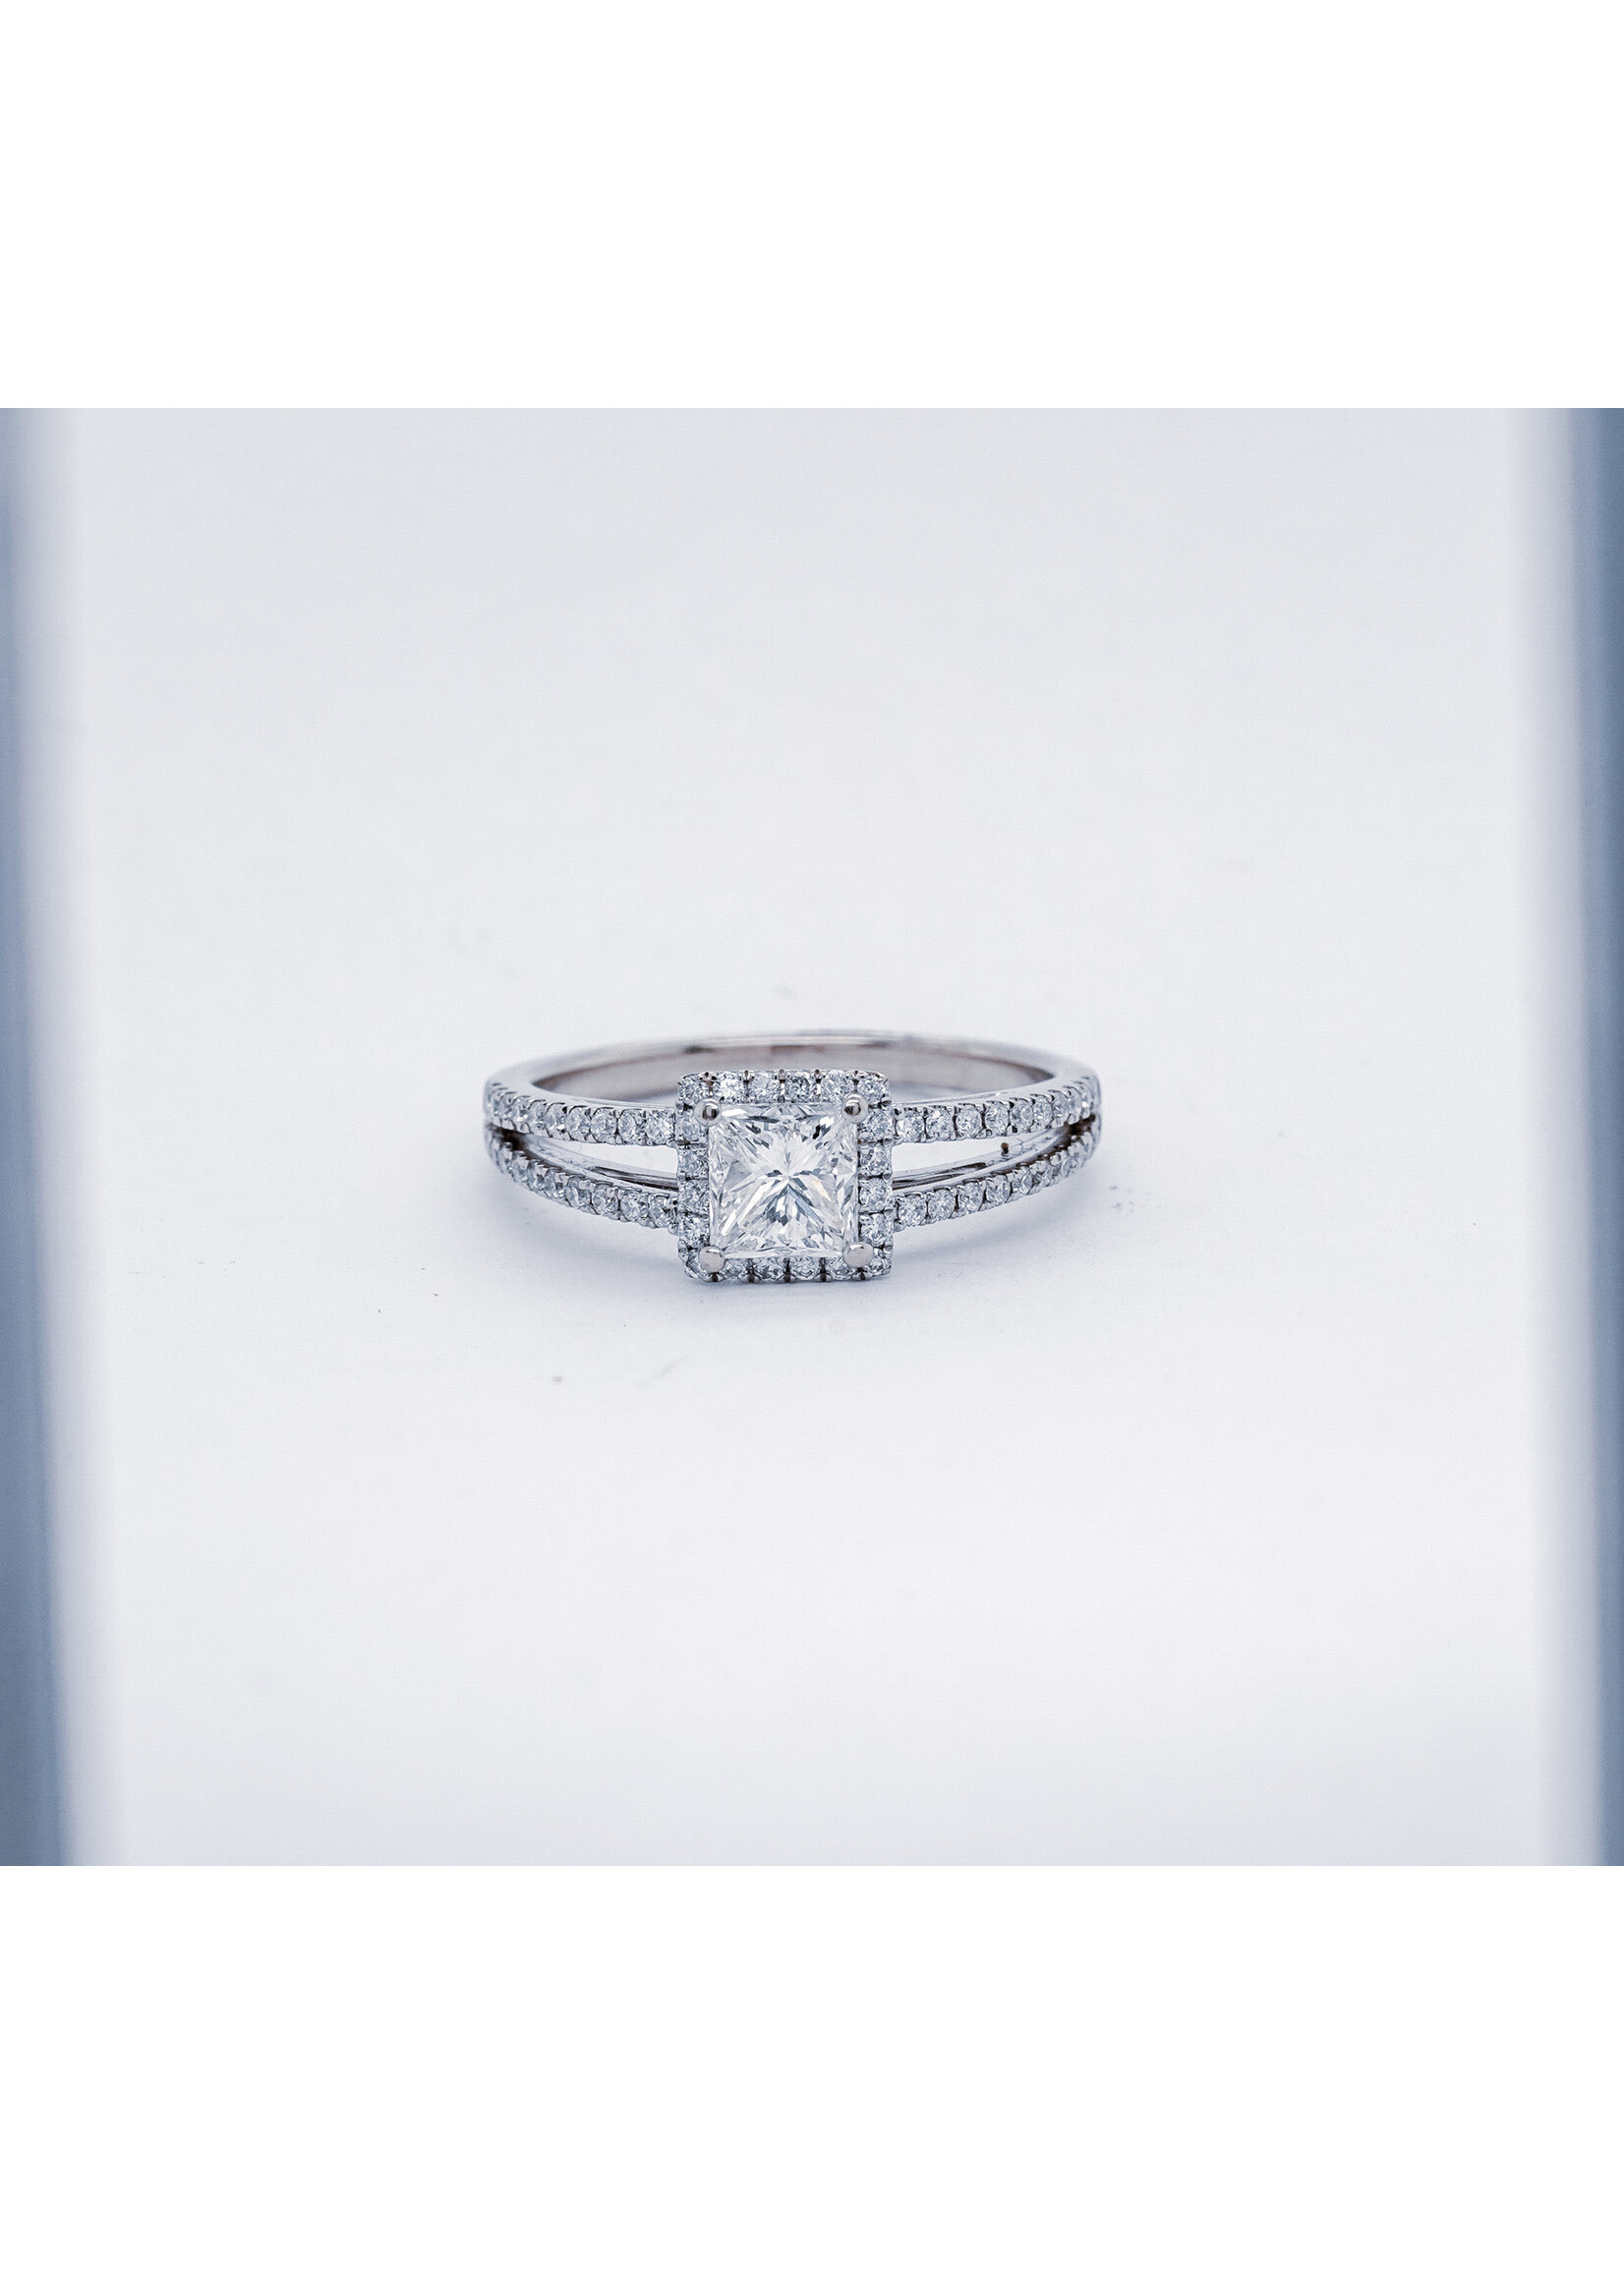 14KW 2.53g 1.15TW (.75ctr) H/SI1 Princess Cut Diamond Halo Engagement Ring (size 5.75)